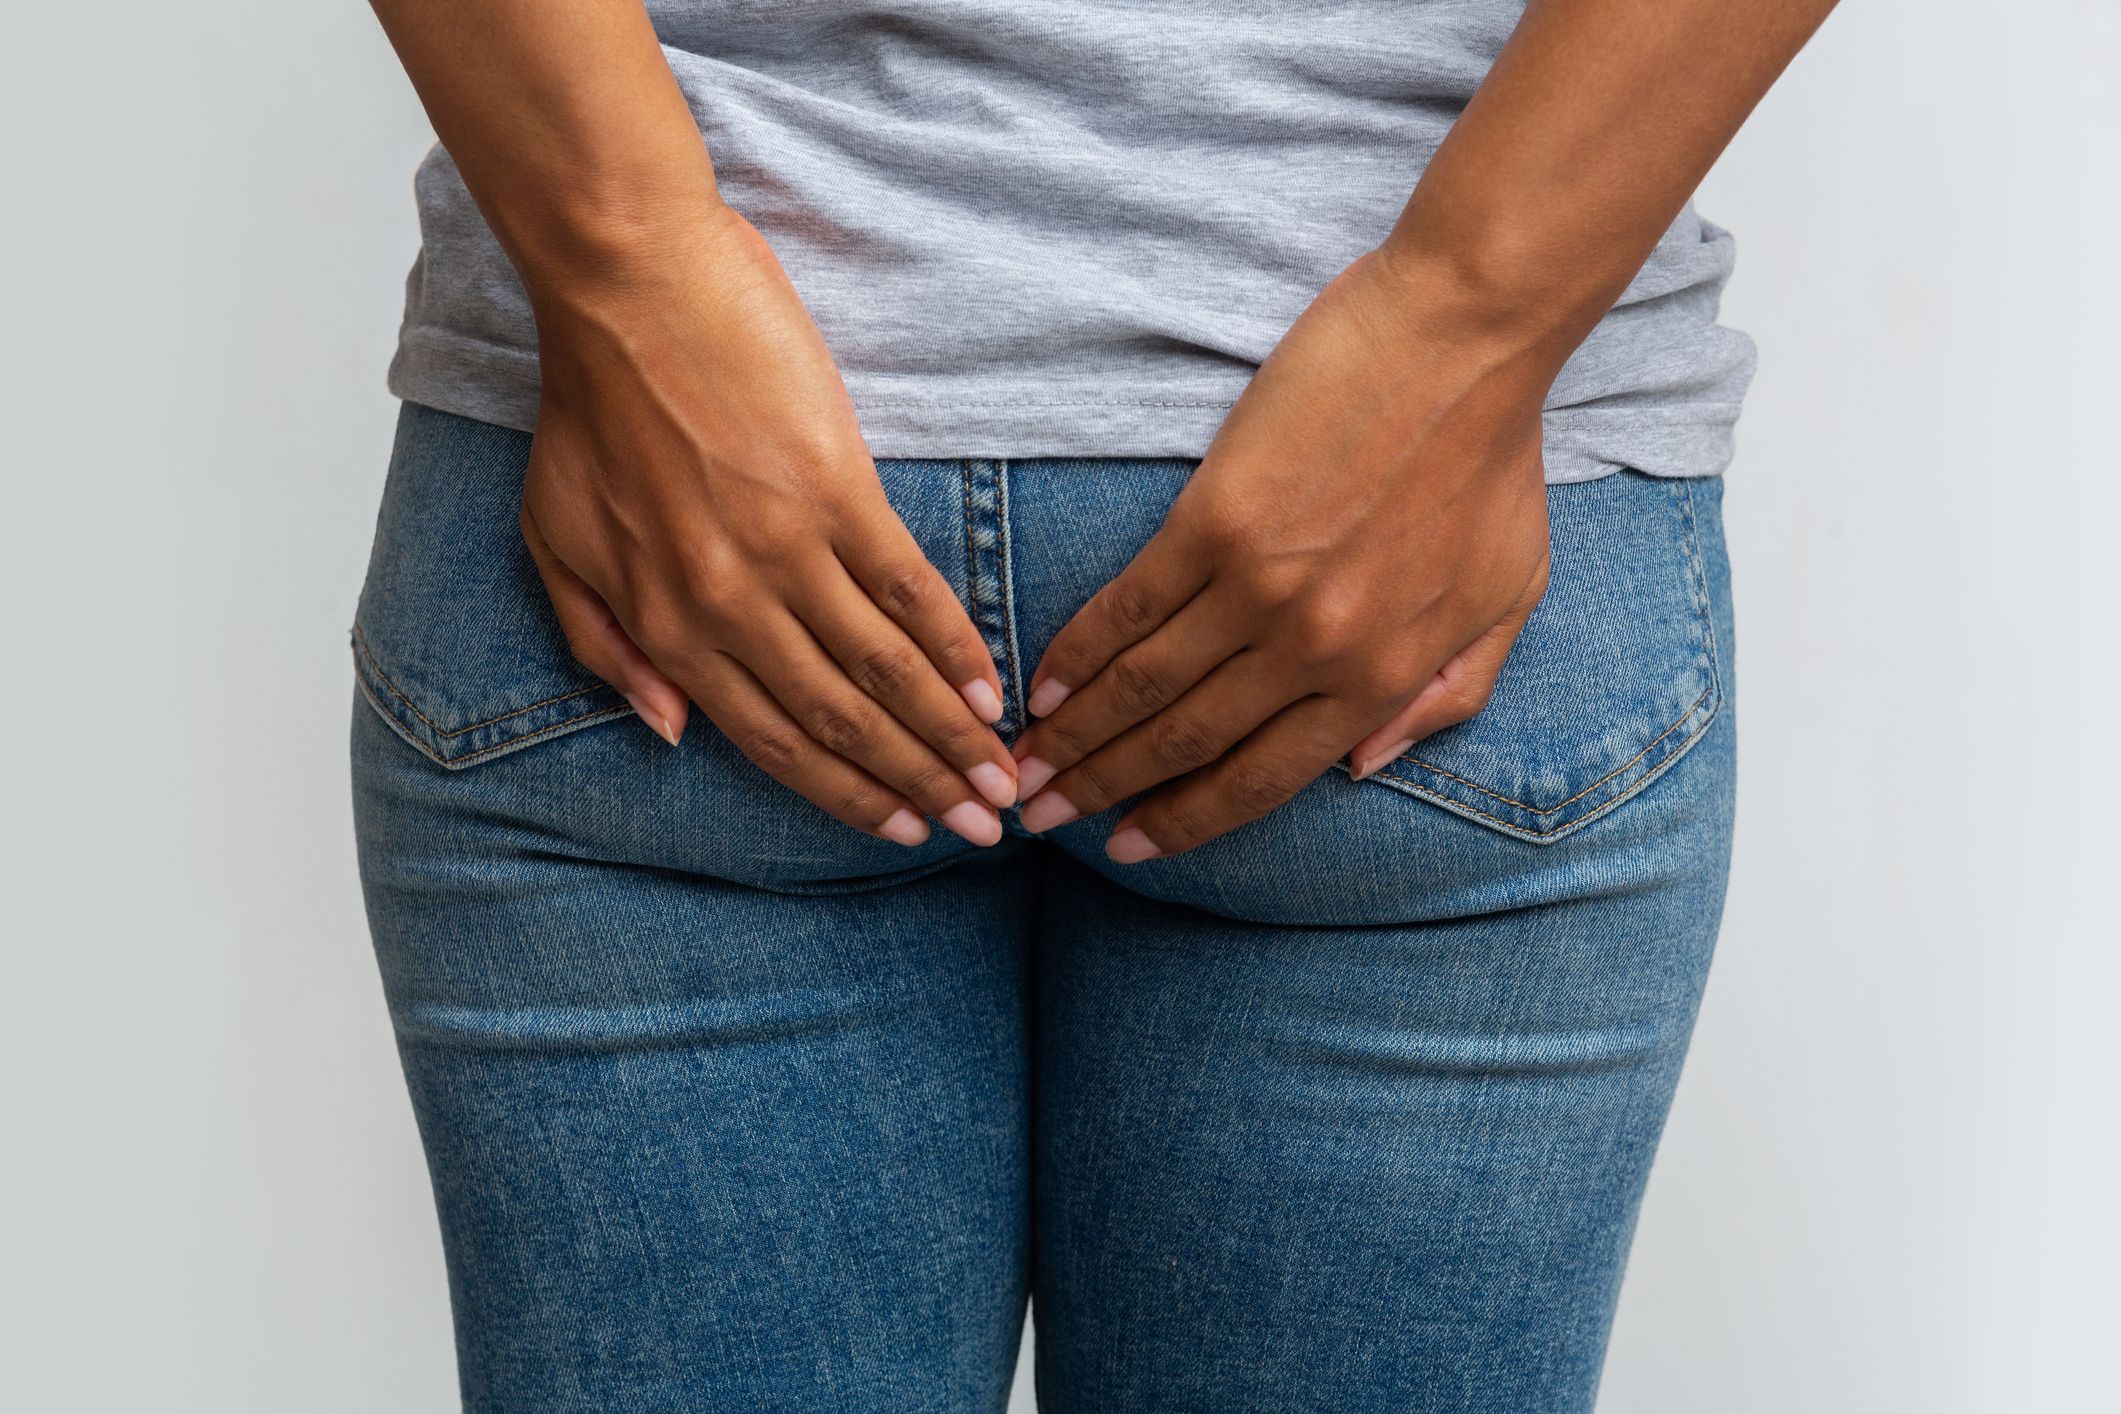 Lump on anus: perianal haematoma symptoms, causes and treatment